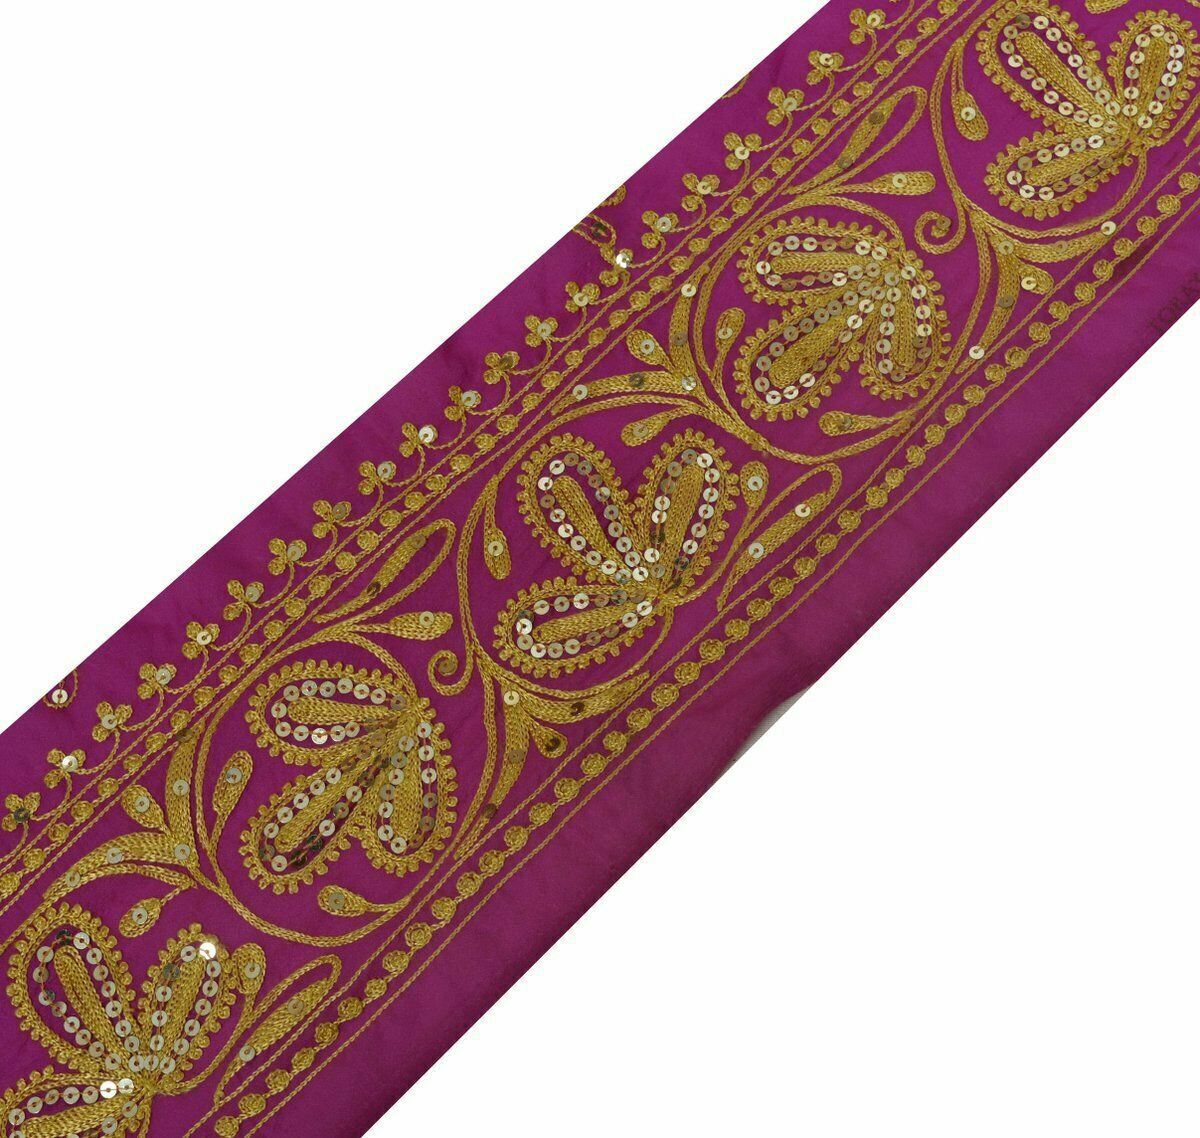 Vintage Sari Border Craft Trim Antique Embroidered Lace Ribbon Red